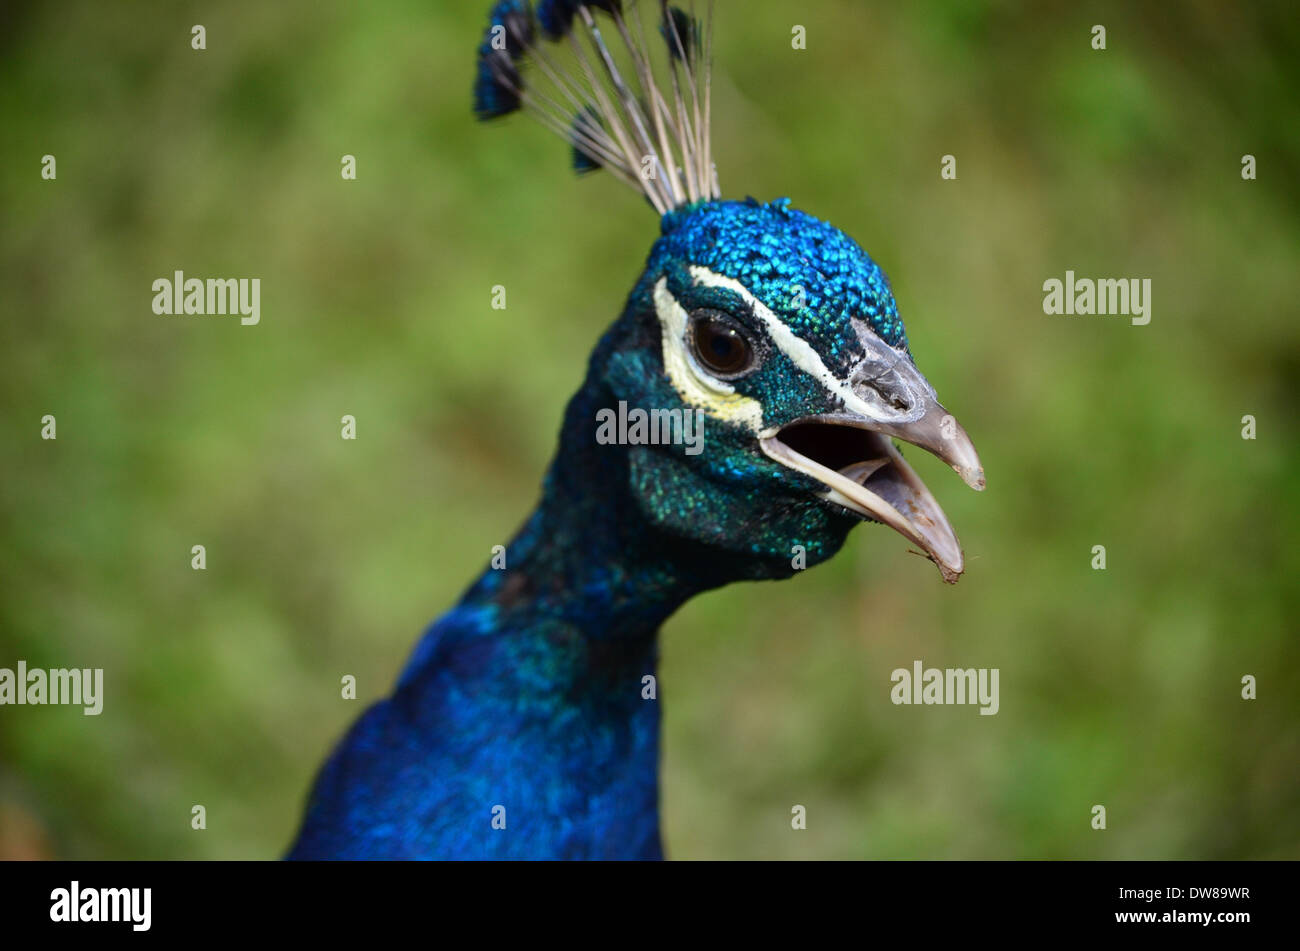 Peacock calling Stock Photo